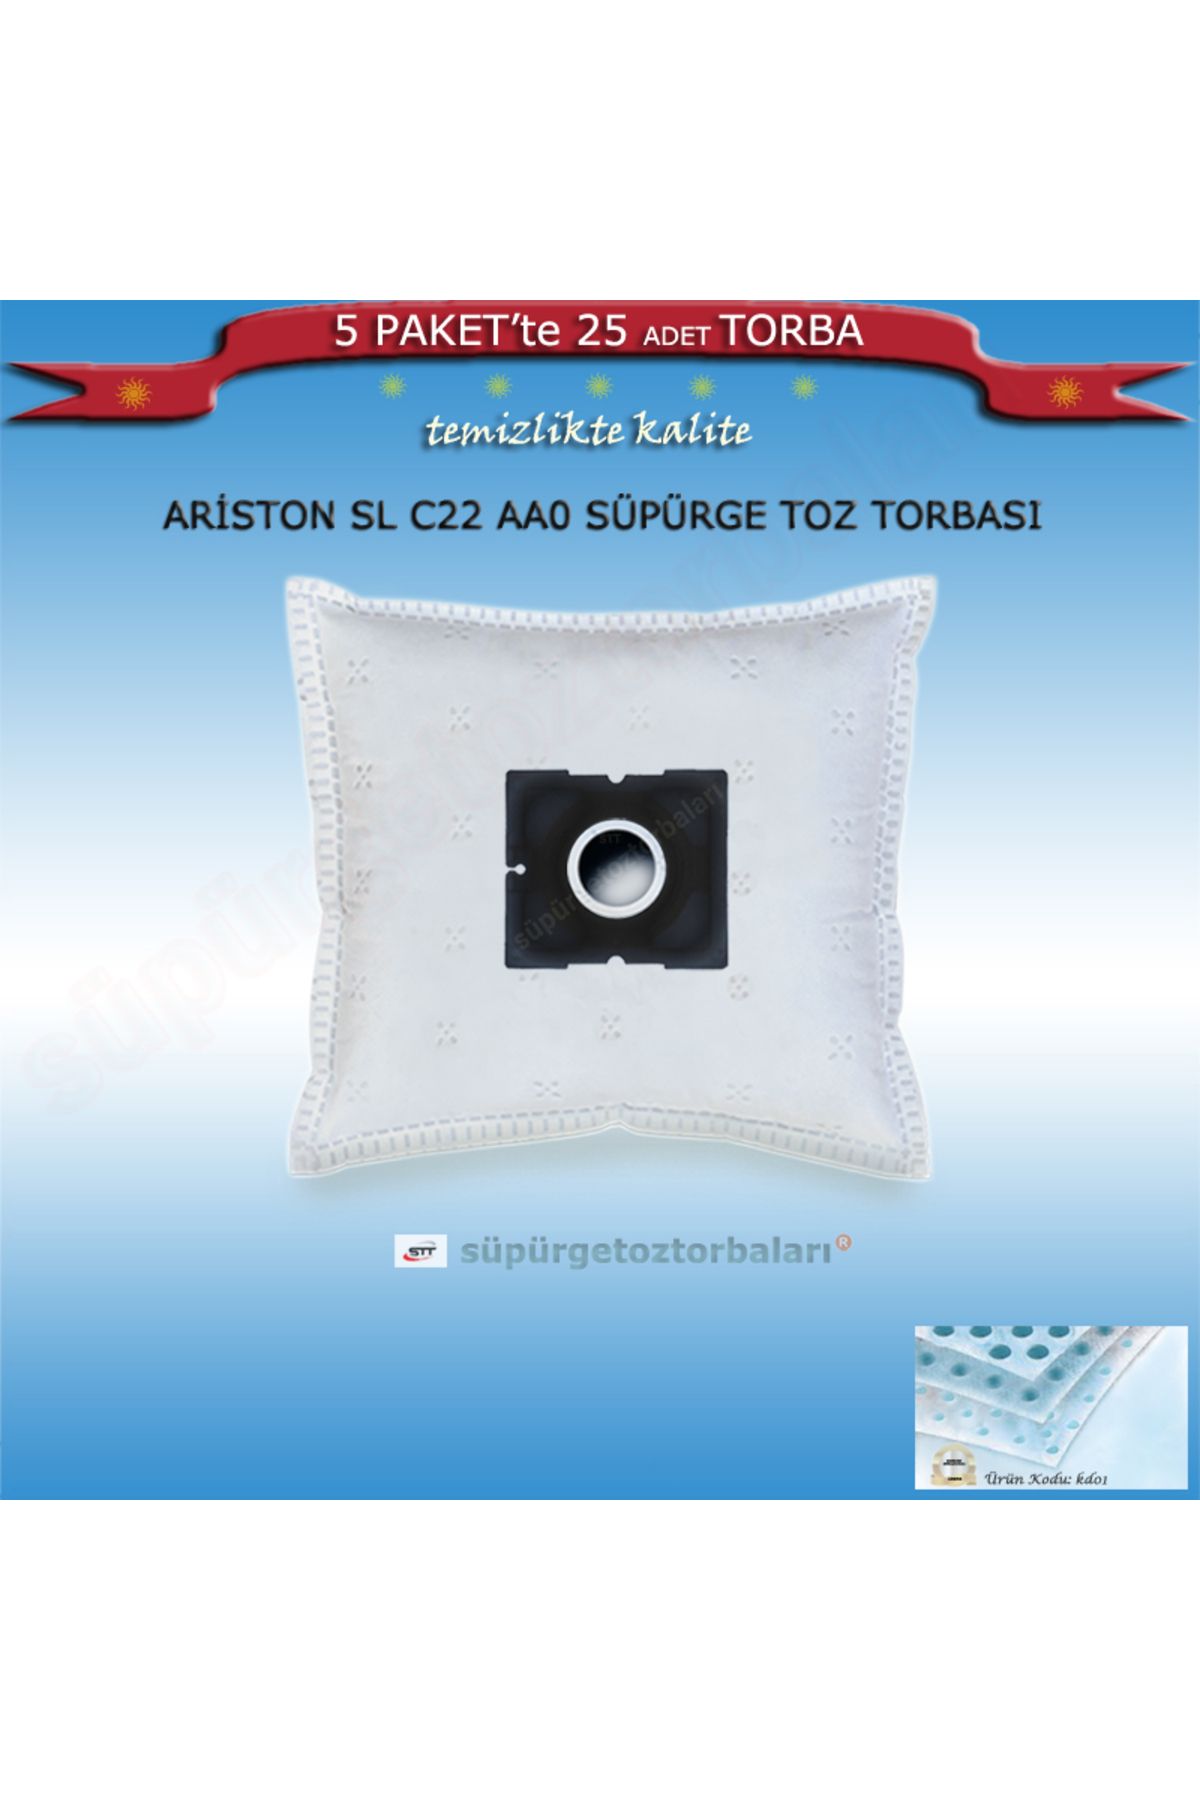 Ariston Sl C22 Aa0 Süpürge Toz Torbası 25 Adet Torba Kd01